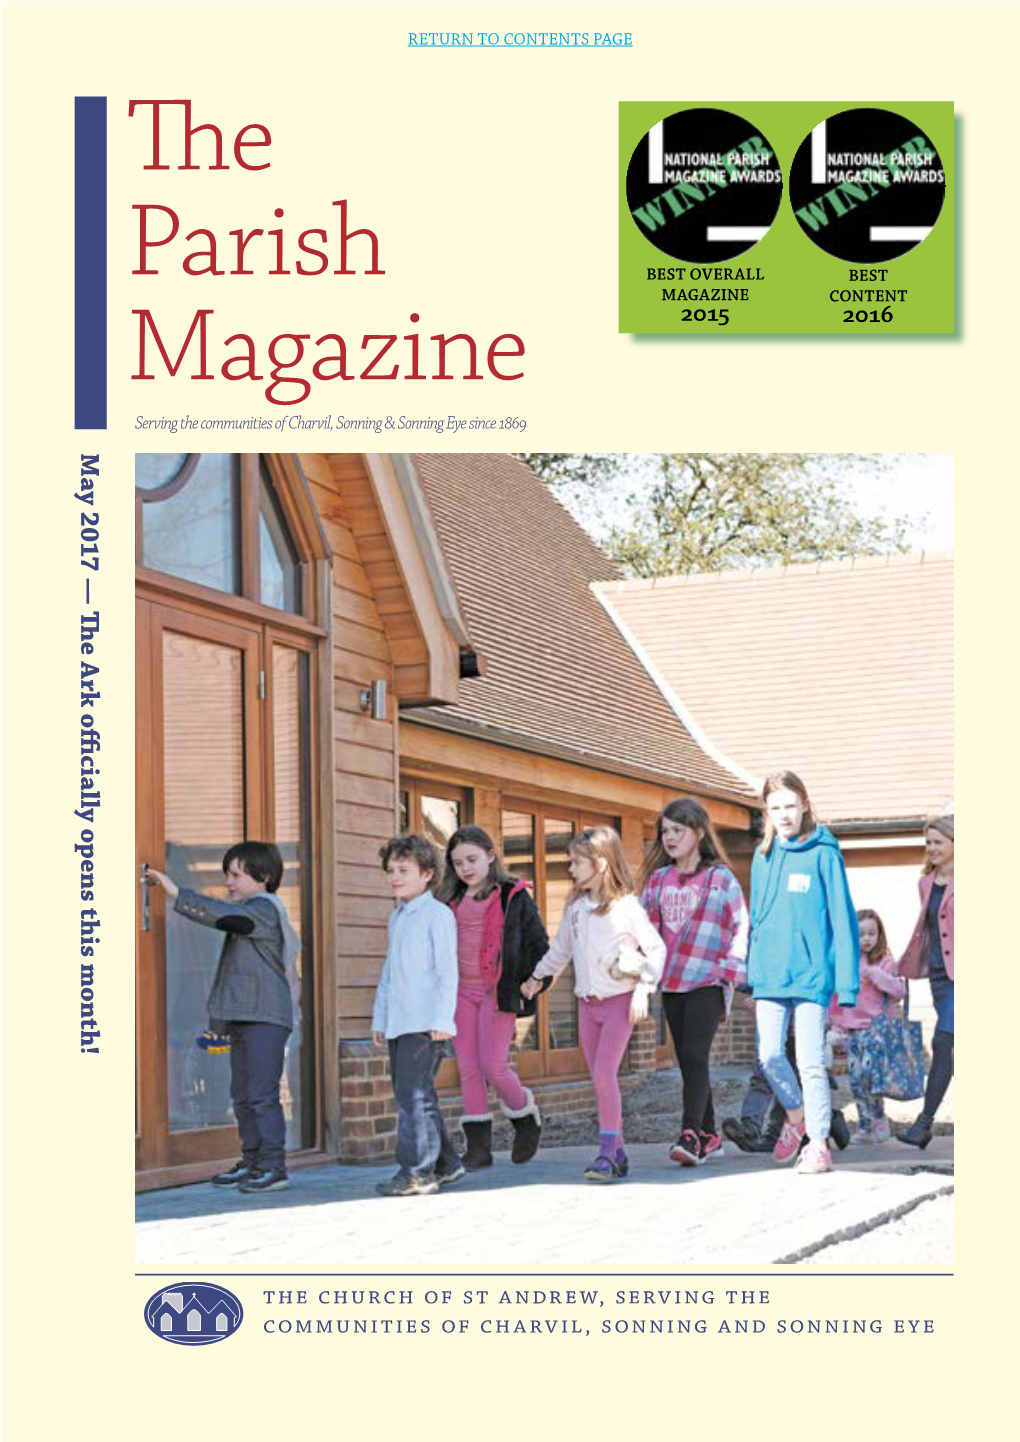 The Parish Magazine May 2017 Edition